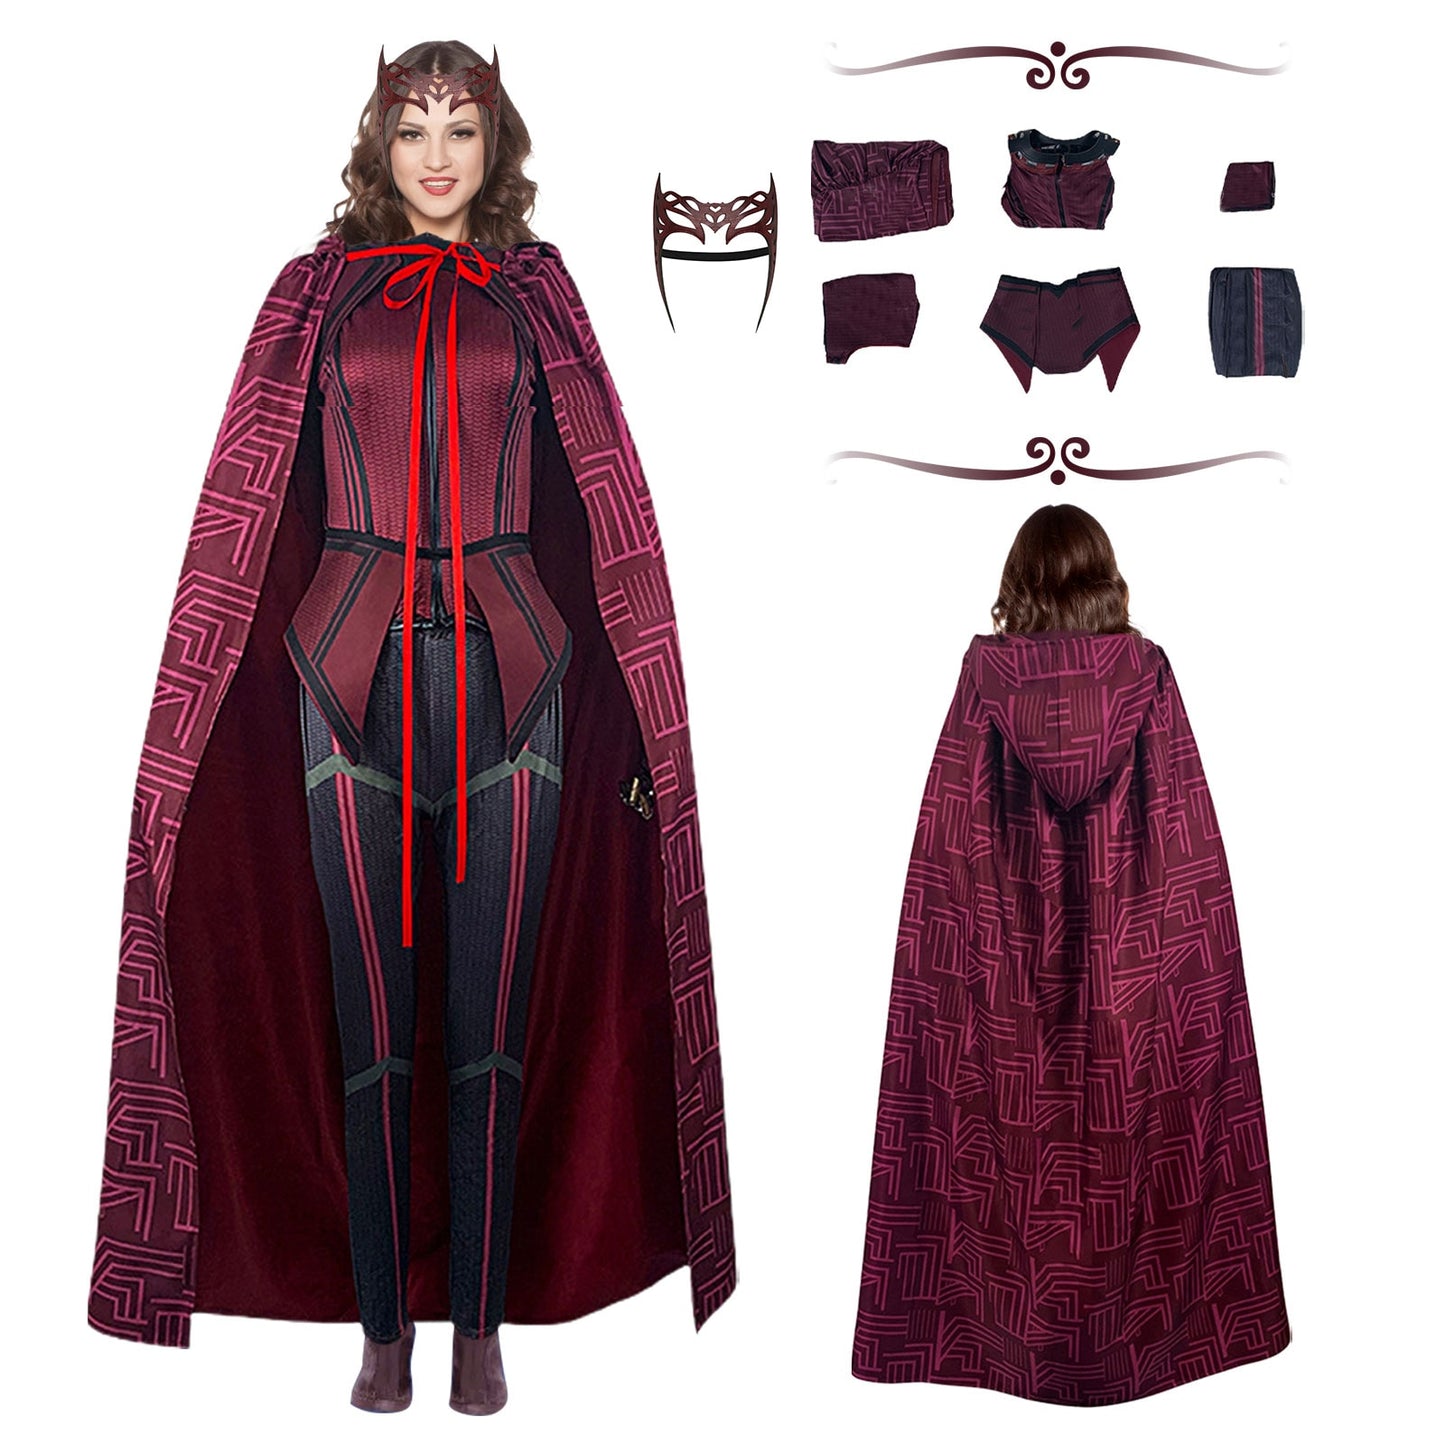 Wanda Vision Costume For Halloween